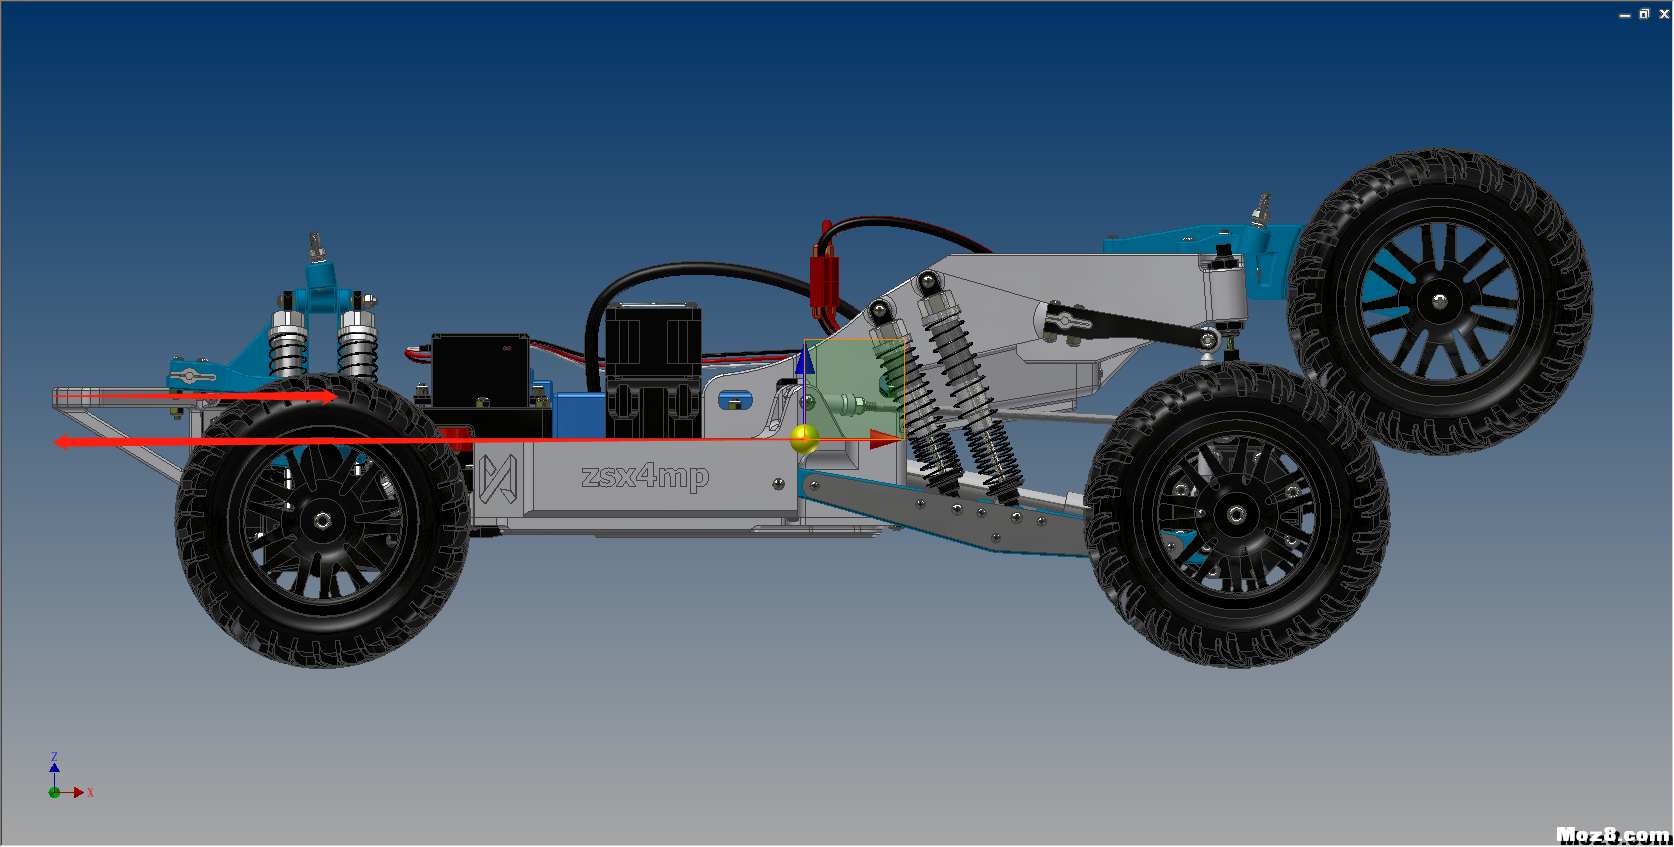 【zsx4mp】3D打印版Trophy Truck模型  作者:zsx4mp 5264 